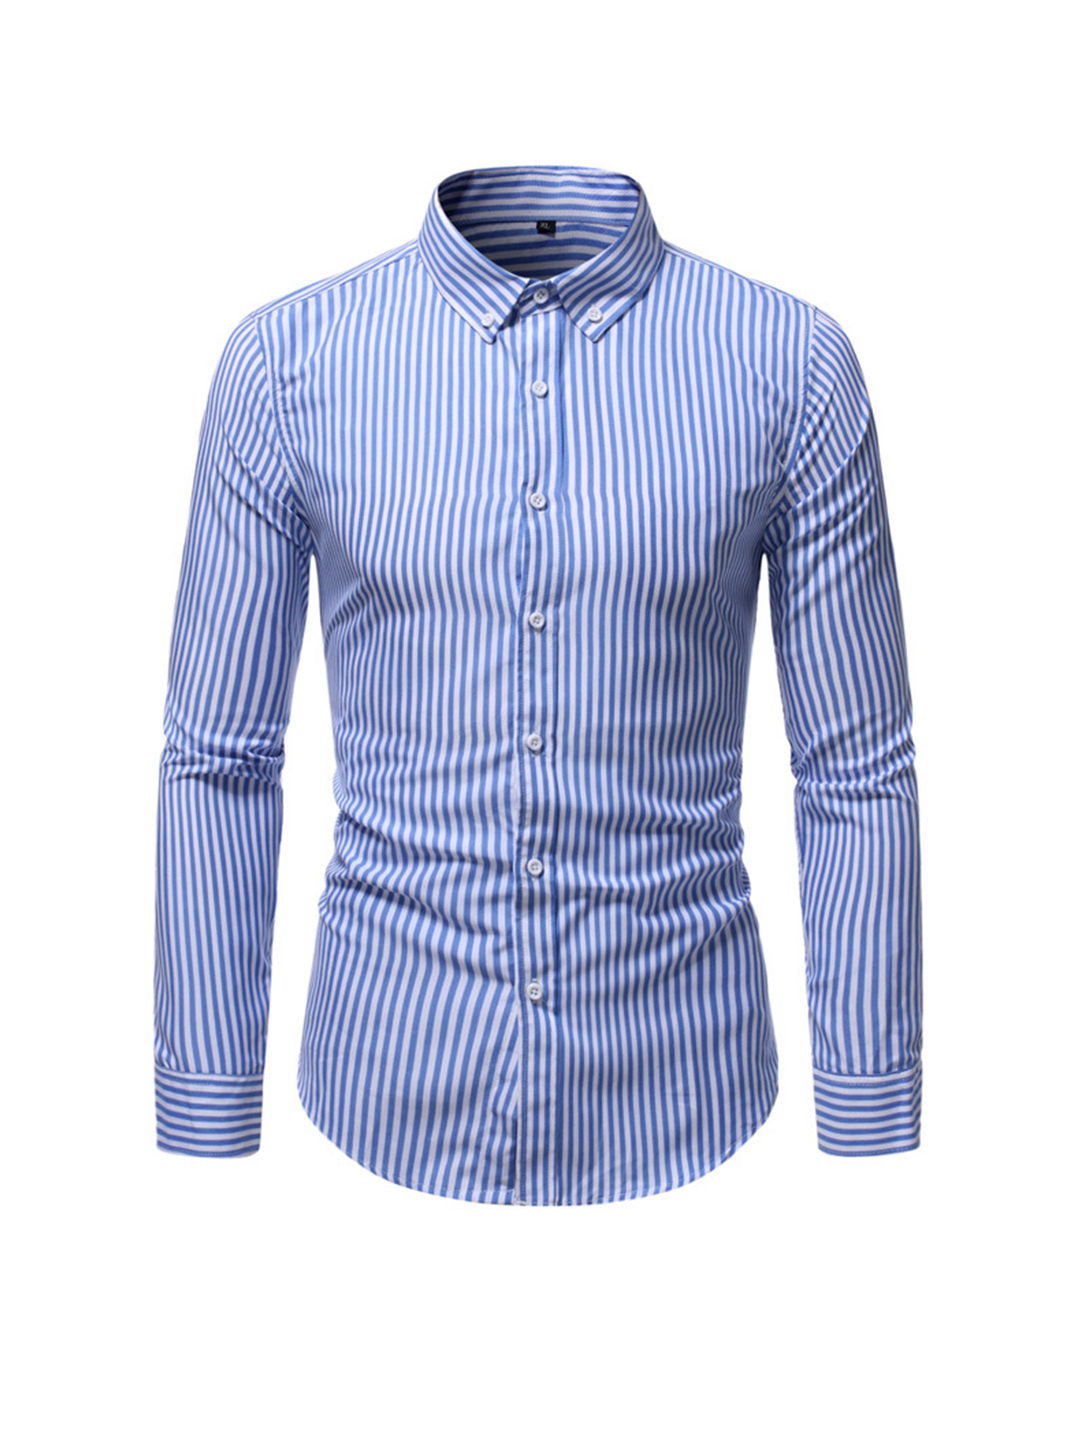 Men's Colton Striped Urban Shirt-poisonstreetwear.com